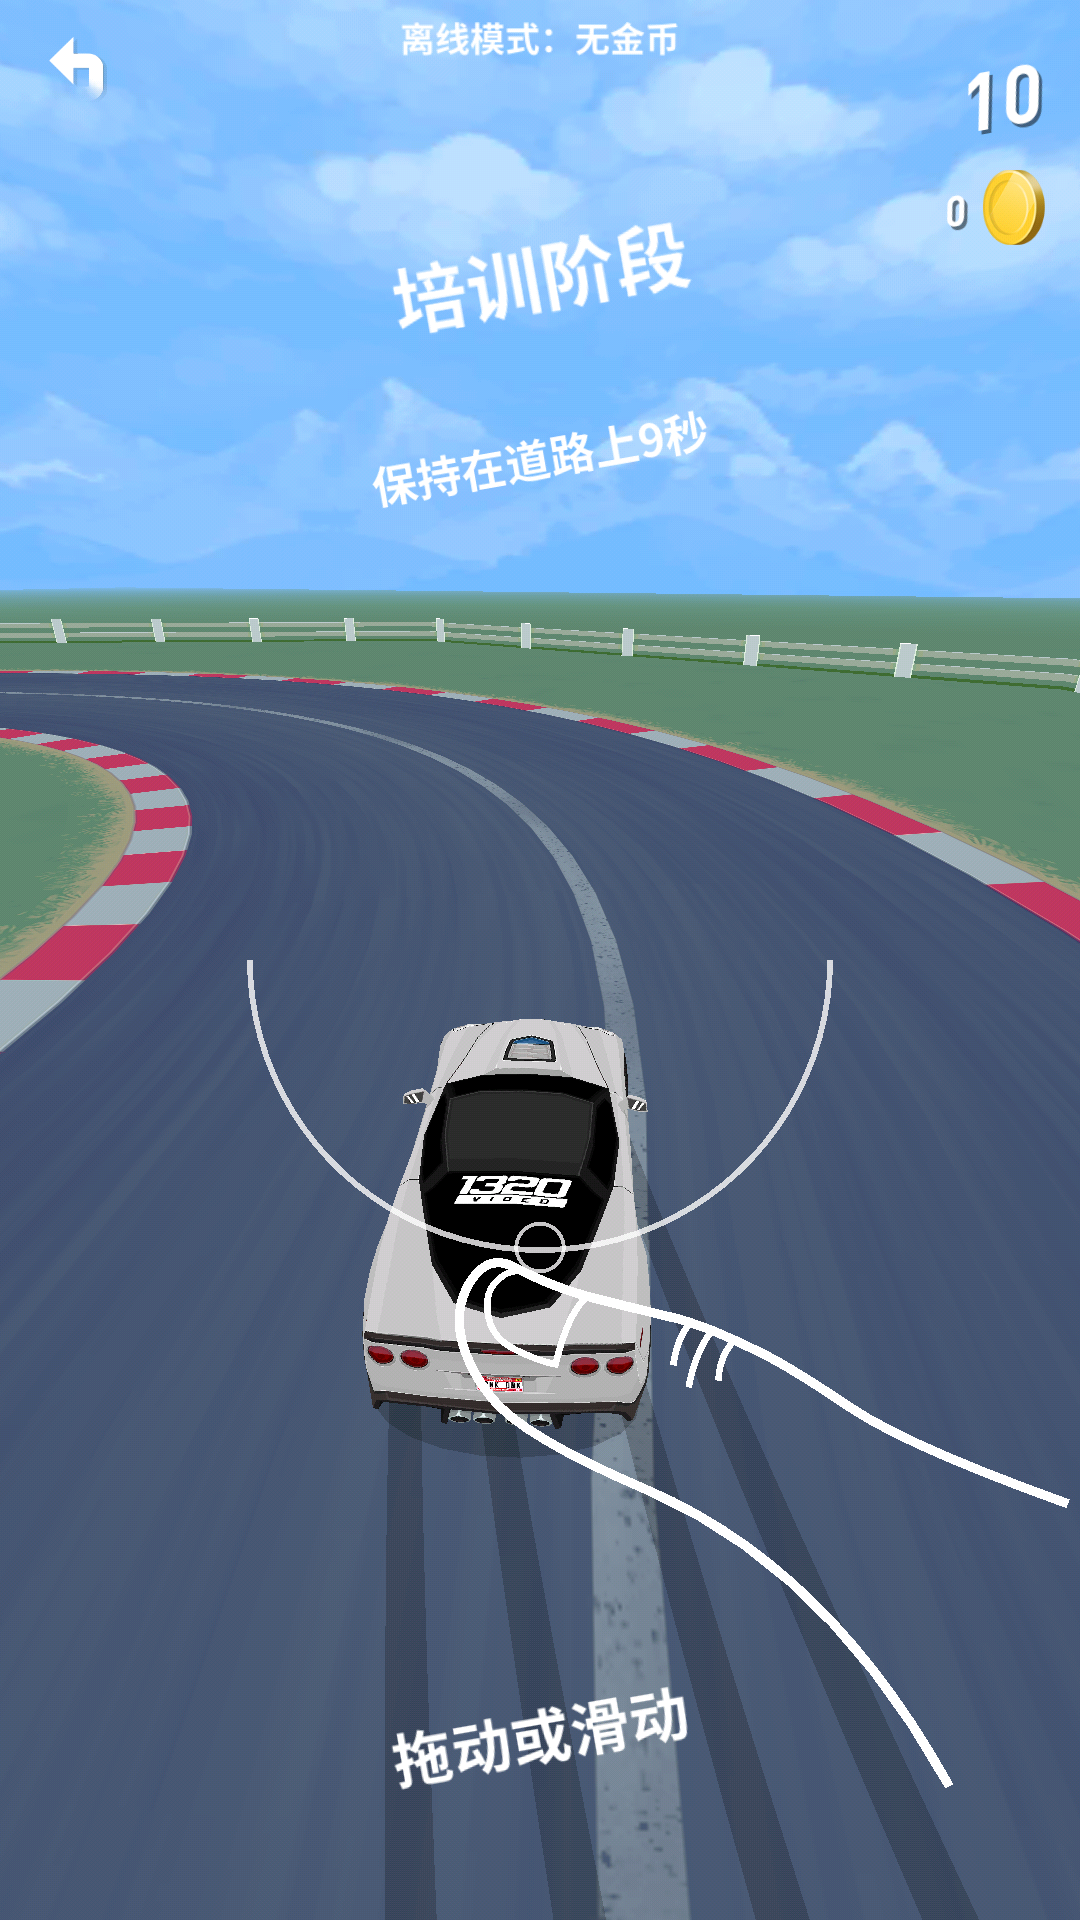 Thumb Drift — Fast & Furious Car Drifting Game(Mod menu)